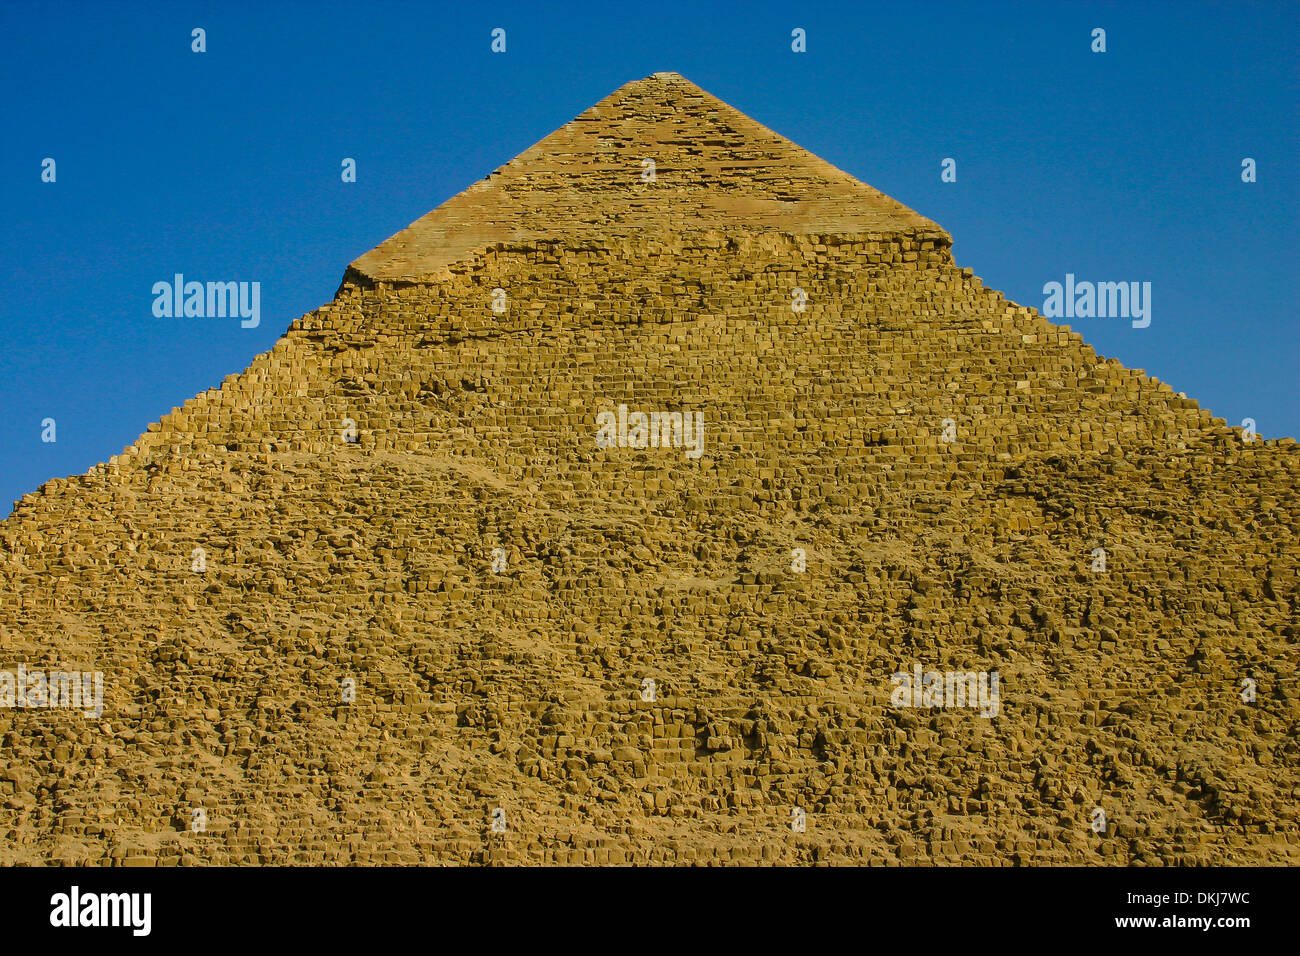 Top of The Pyramid of Khafre, Great Pyramids of Giza near Cairo, Egypt. Stock Photo